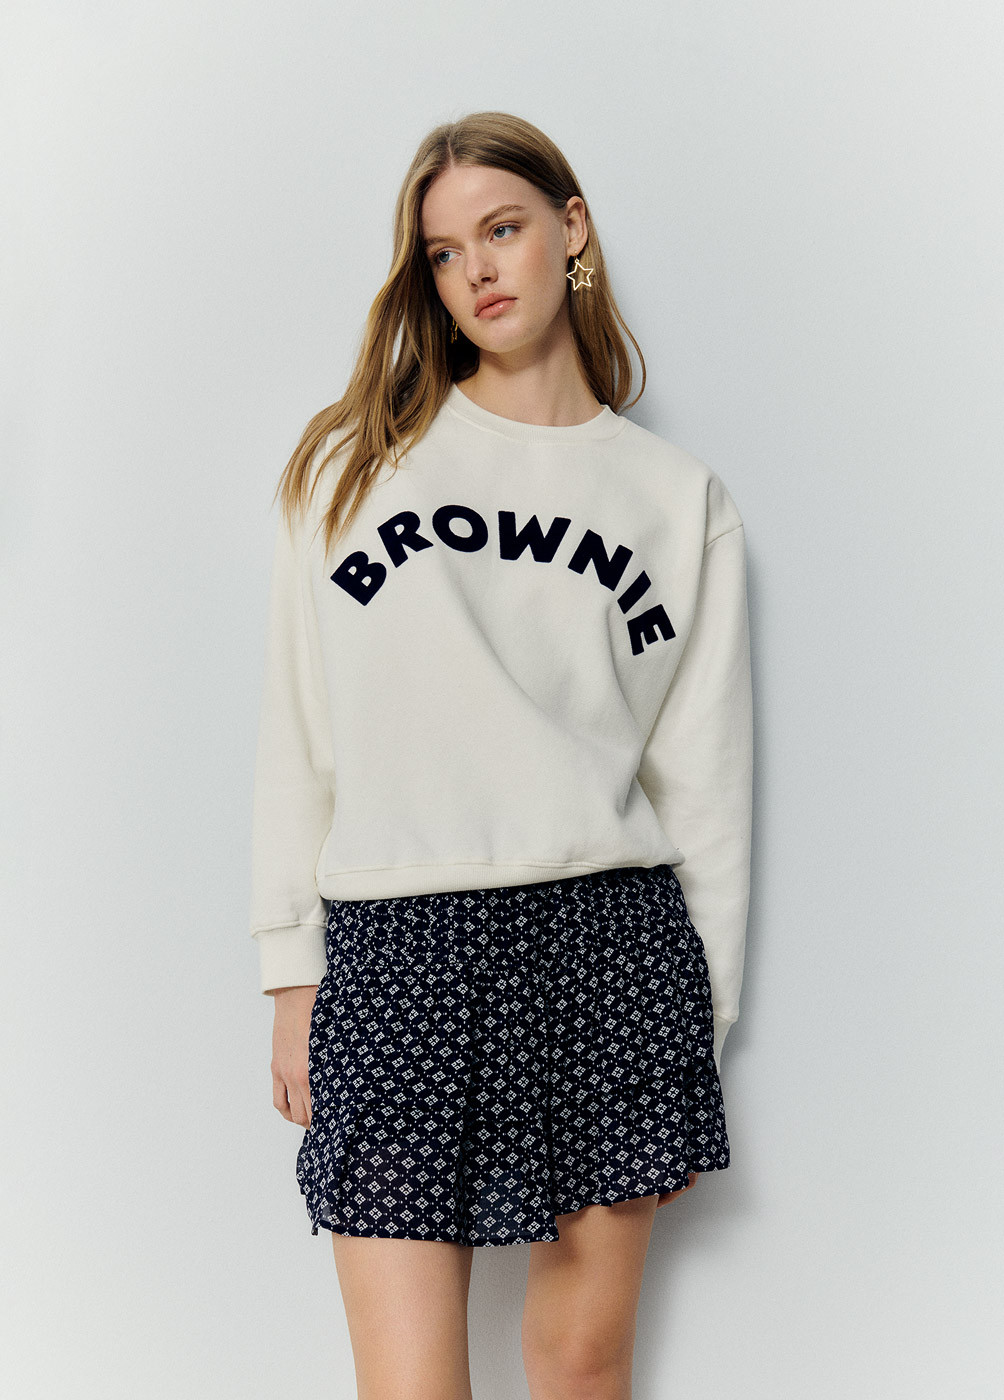 Sweater brownie flock 